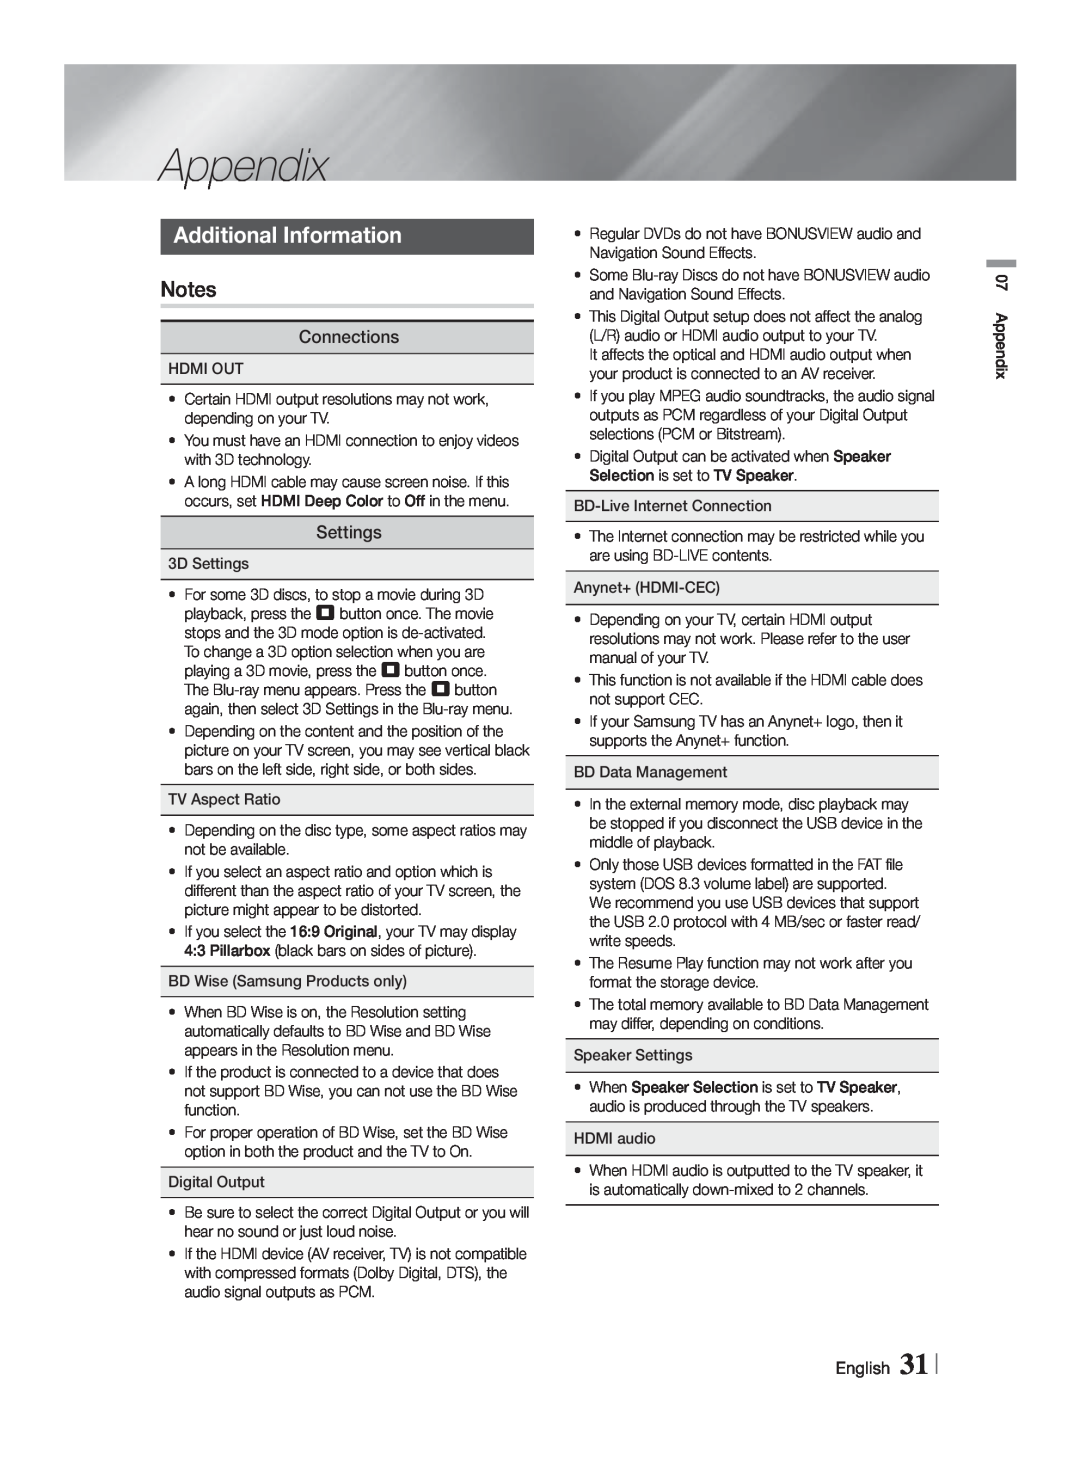 Samsung HTF4500ZA user manual Appendix, Additional Information, English 